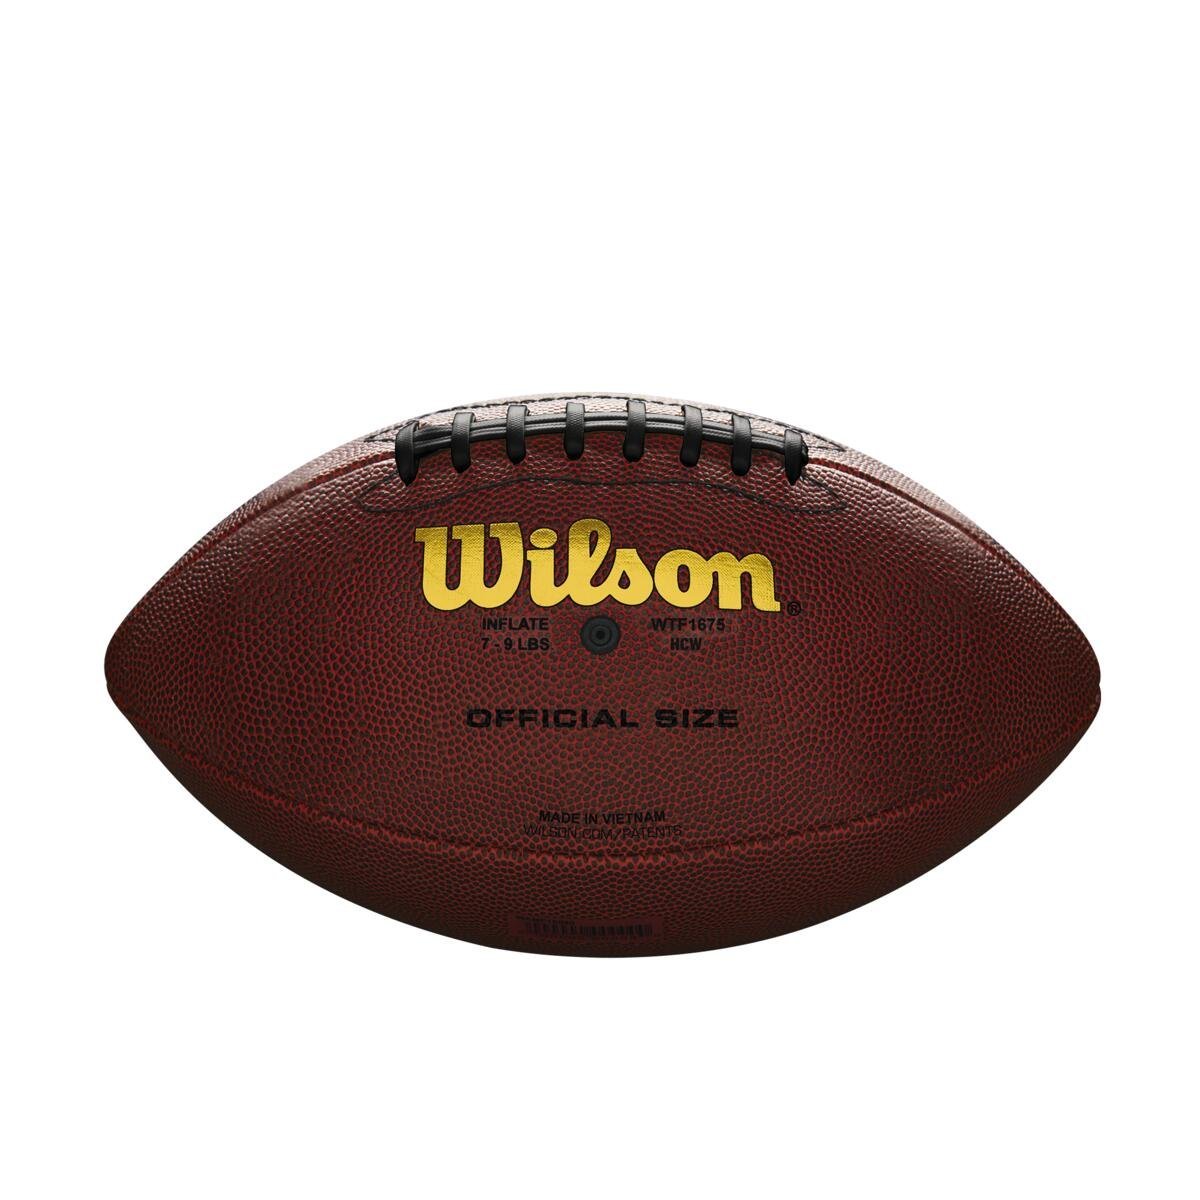 Lopta Wilson NFL Tailgate Fb Off - hnedá